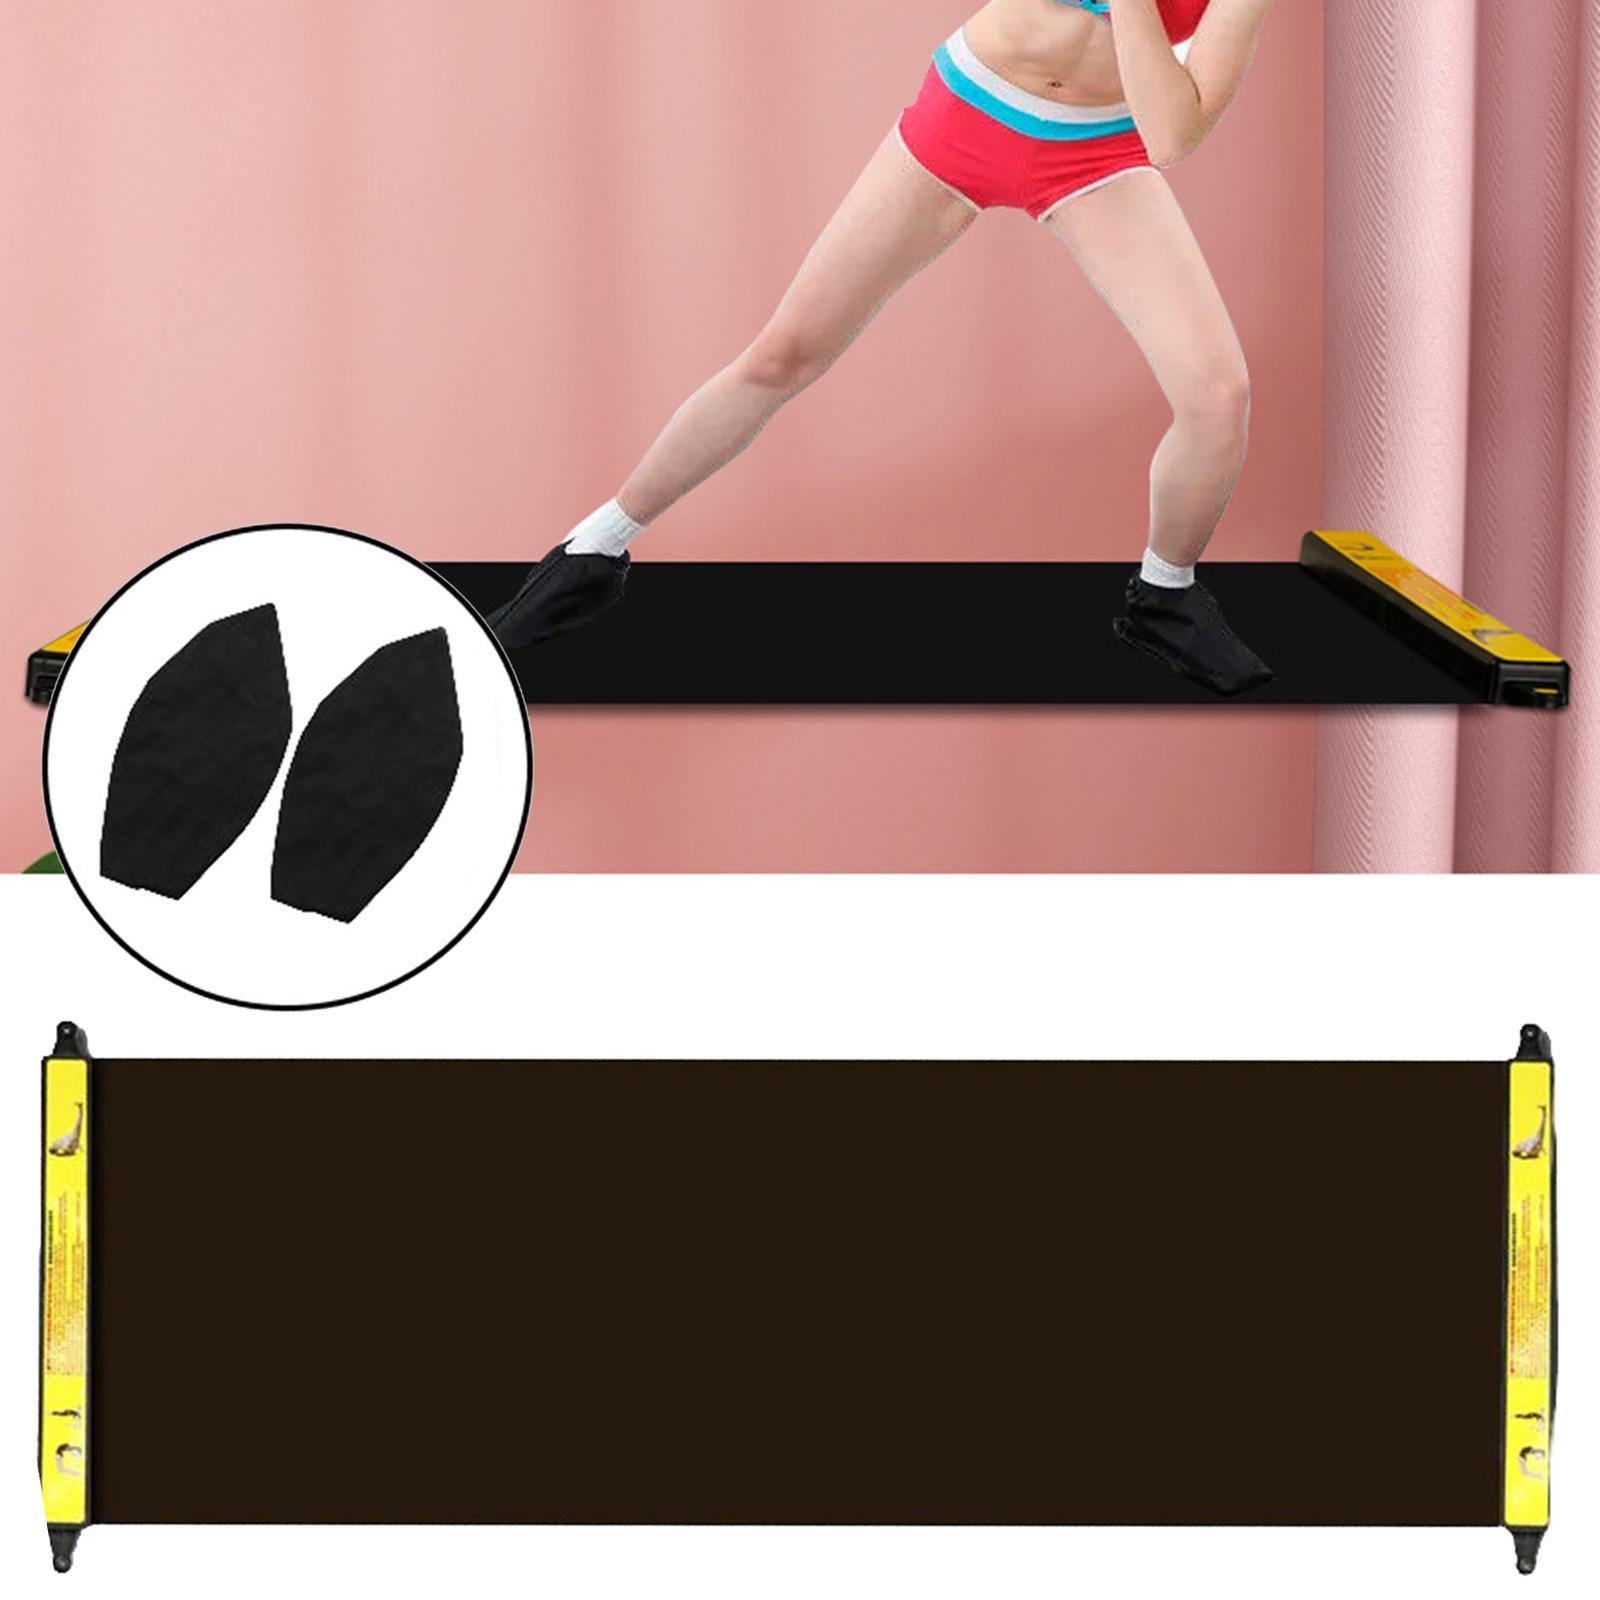 Slide Board Home Gym Equipment for Balance Cardio Exercis